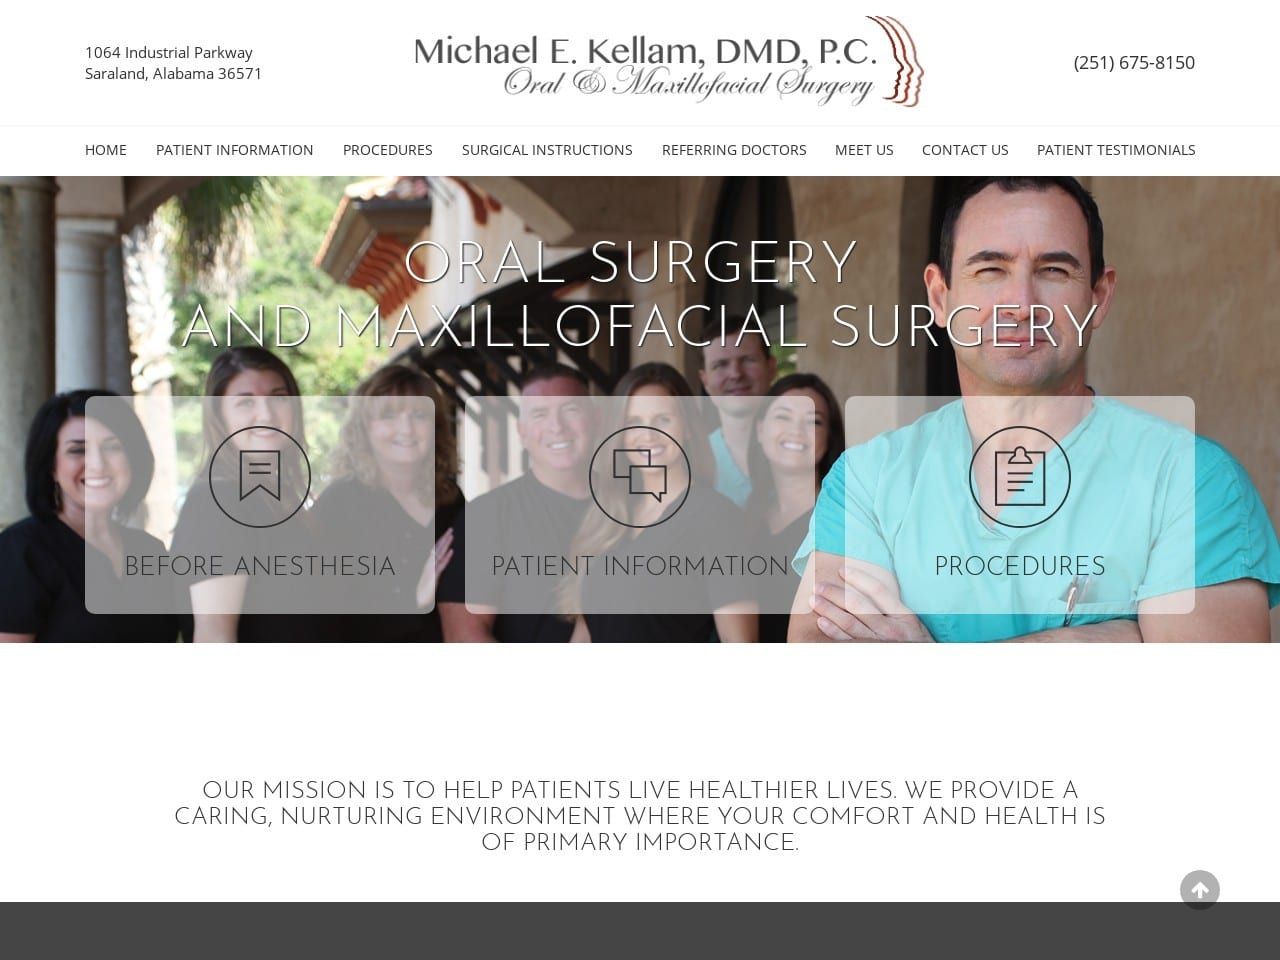 Dr. Michael E. Kellam DMD Website Screenshot from michaelekellamdmd.com